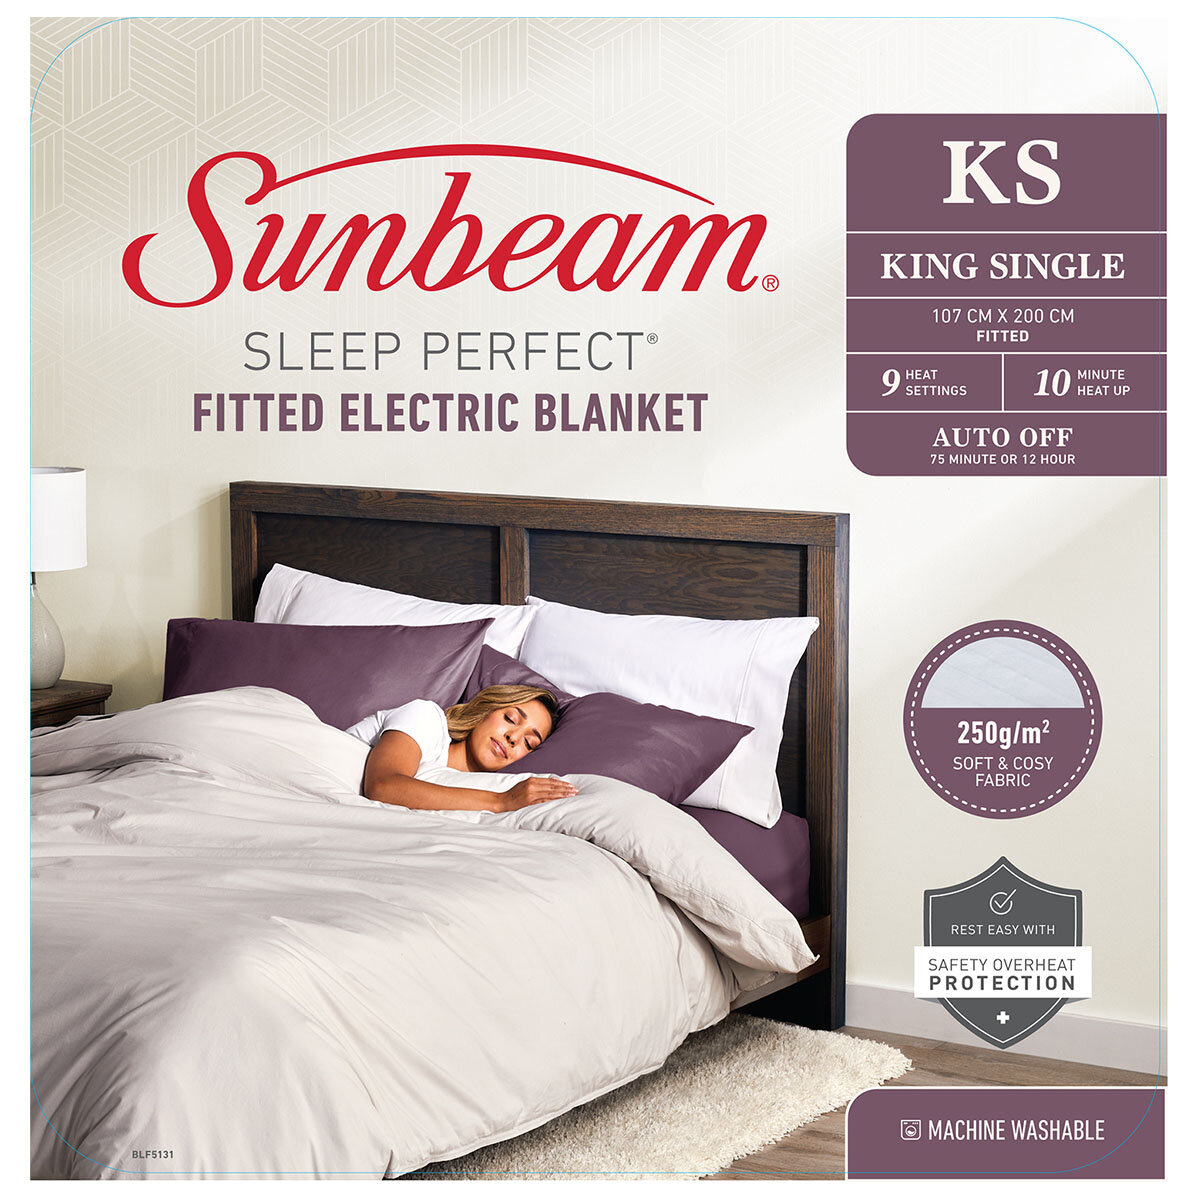 Sunbeam Sleep Perfect King Single, Heated Blanket For King Size Bed